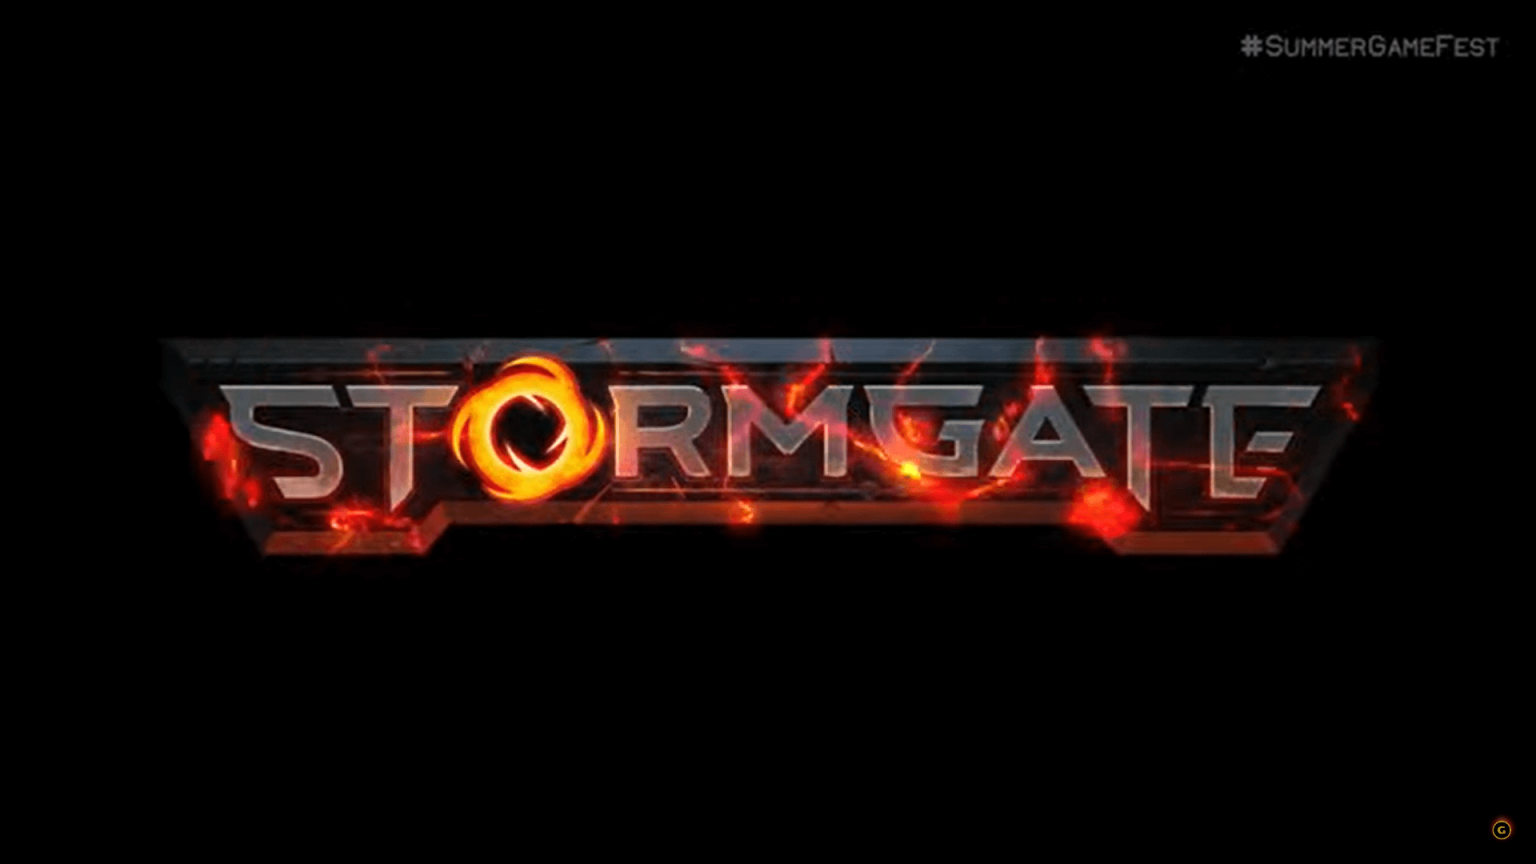 Stormgate